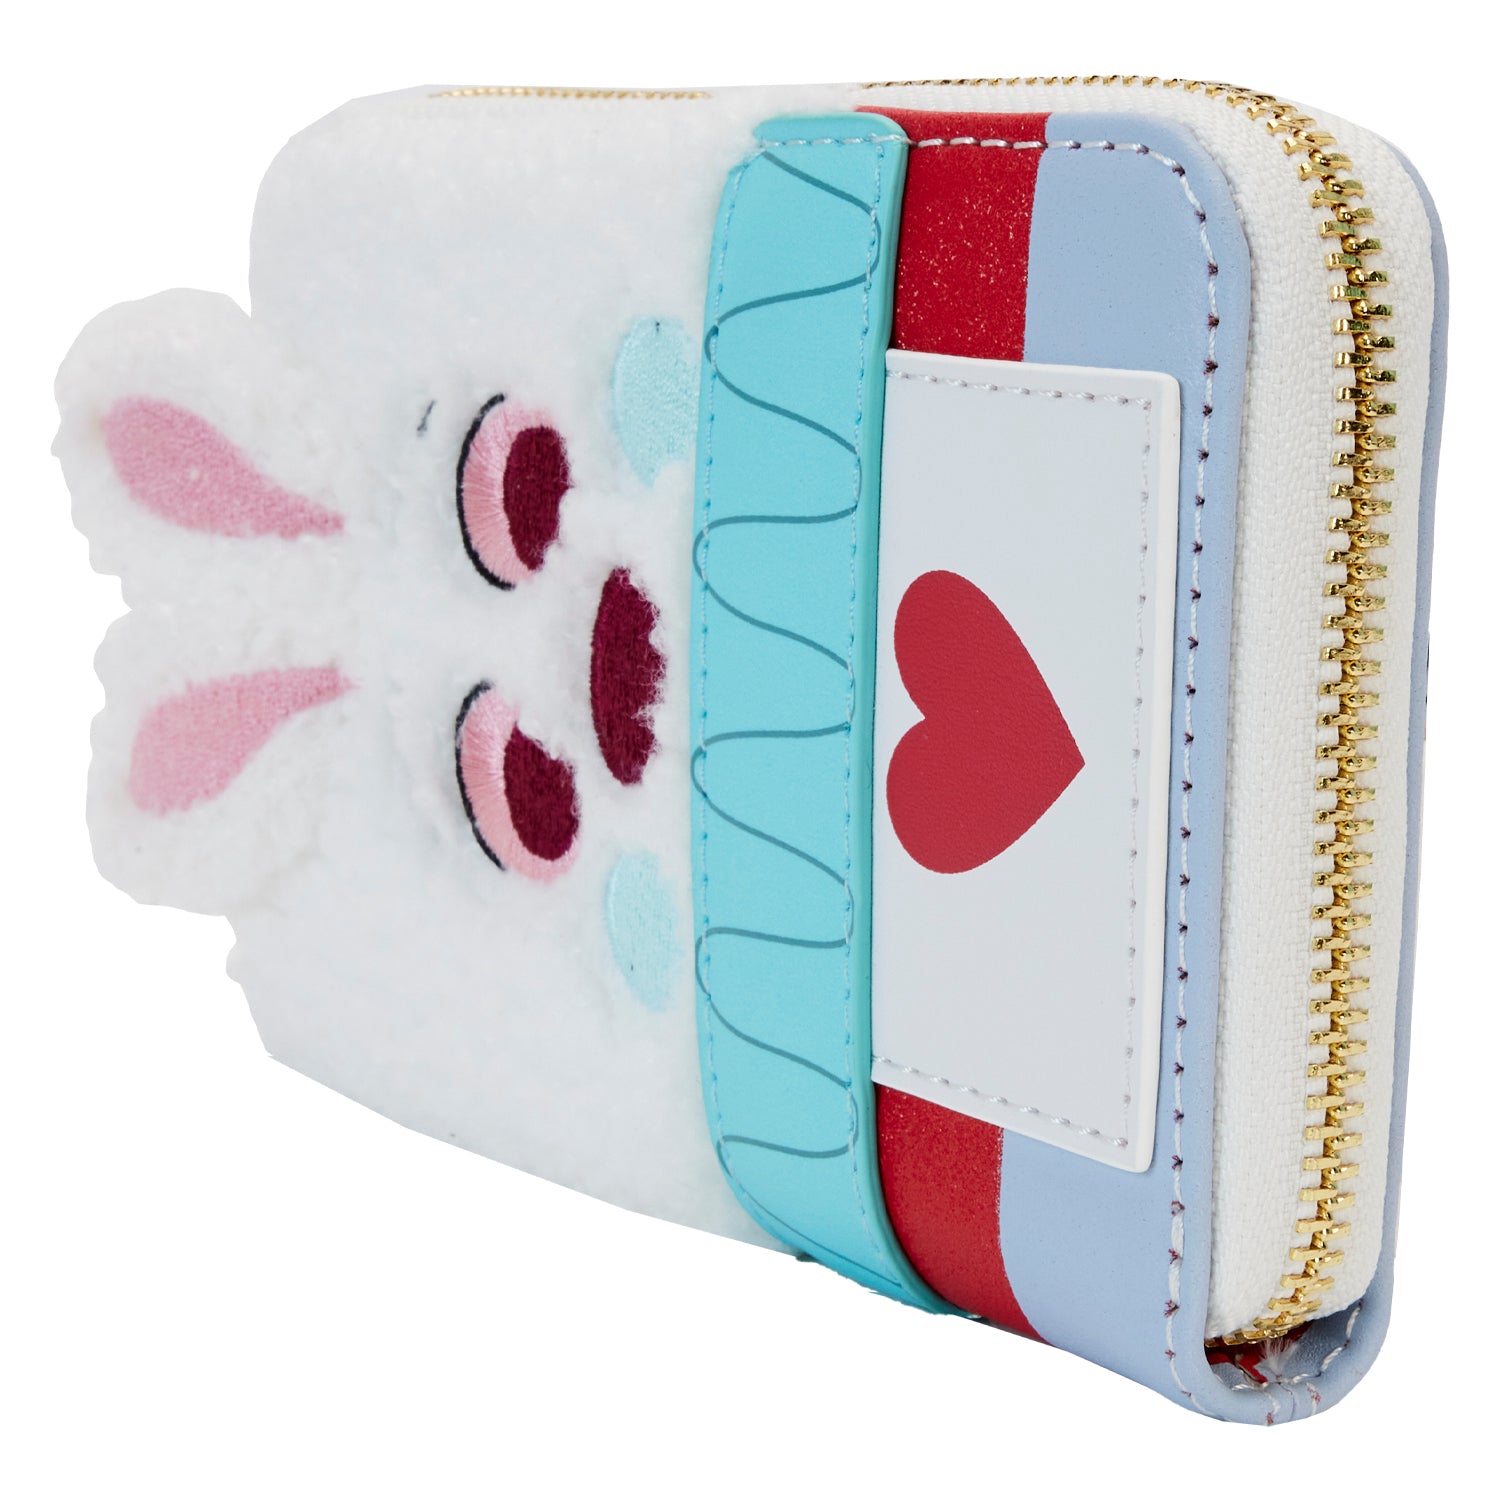 Louis Vuitton Mickey&Minnie mouse Disney wallet preorder japan